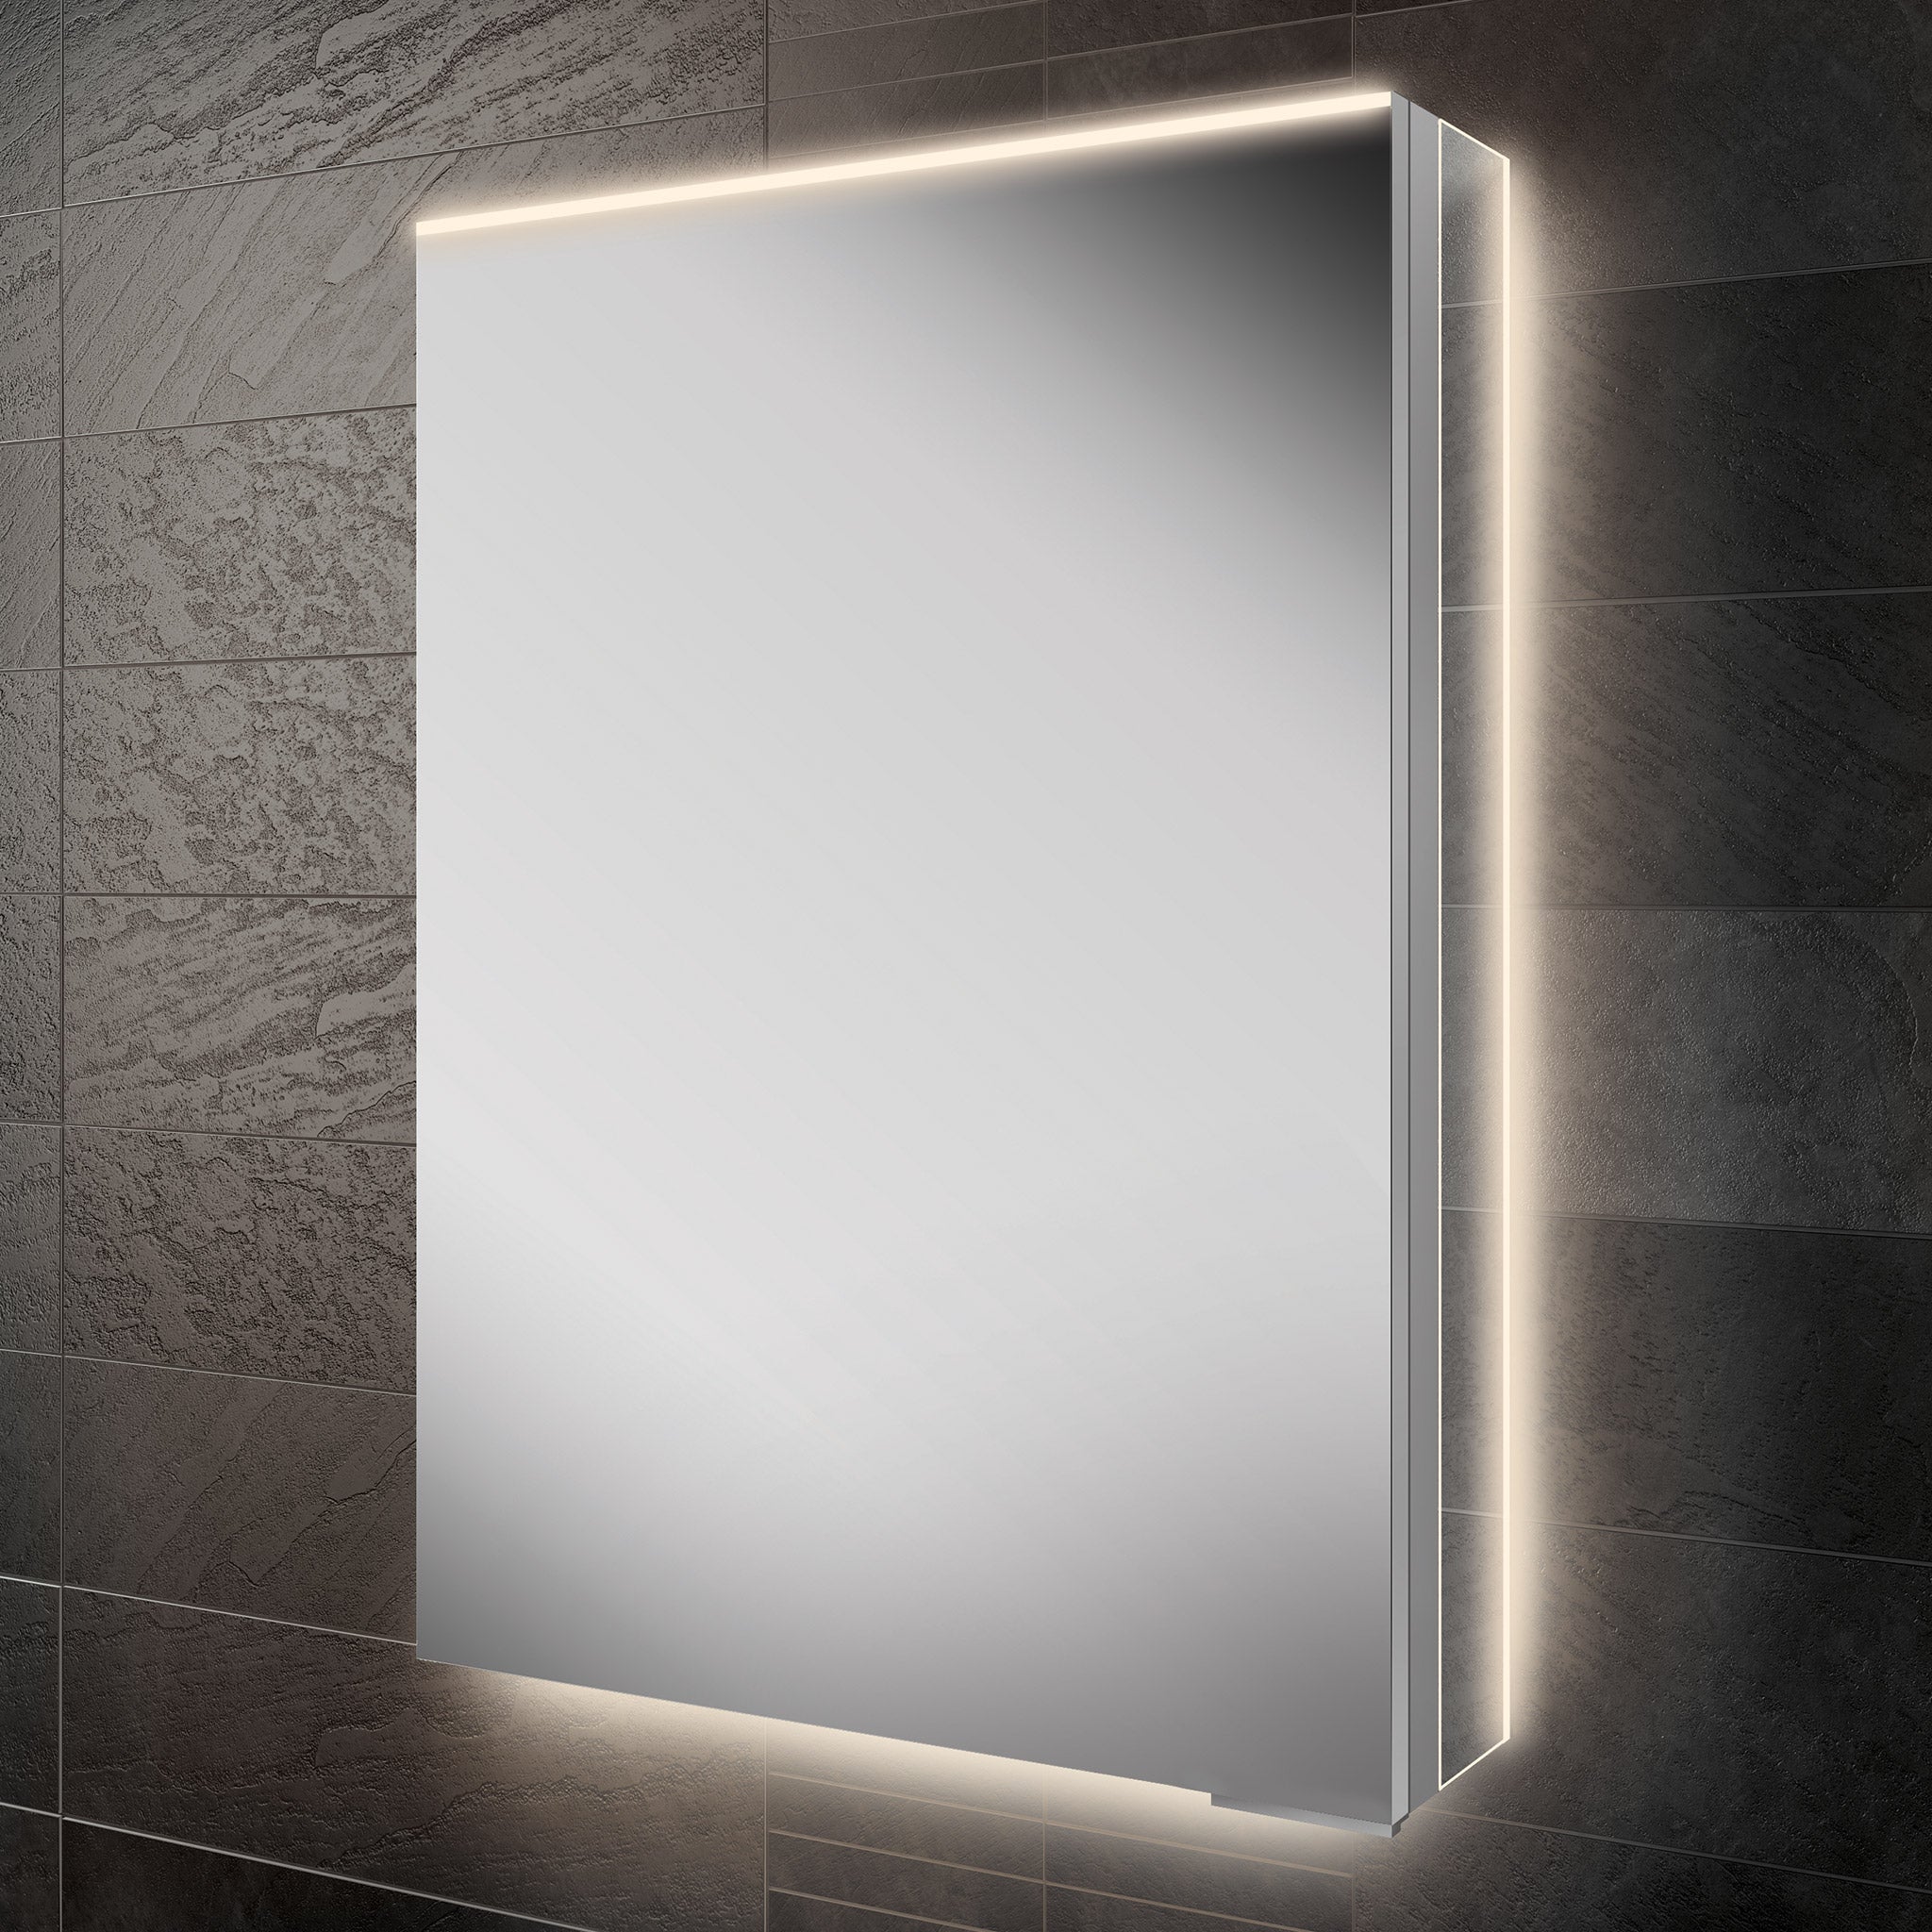 HiB Ether 50 LED Mirror Cabinet 50 x 70cm